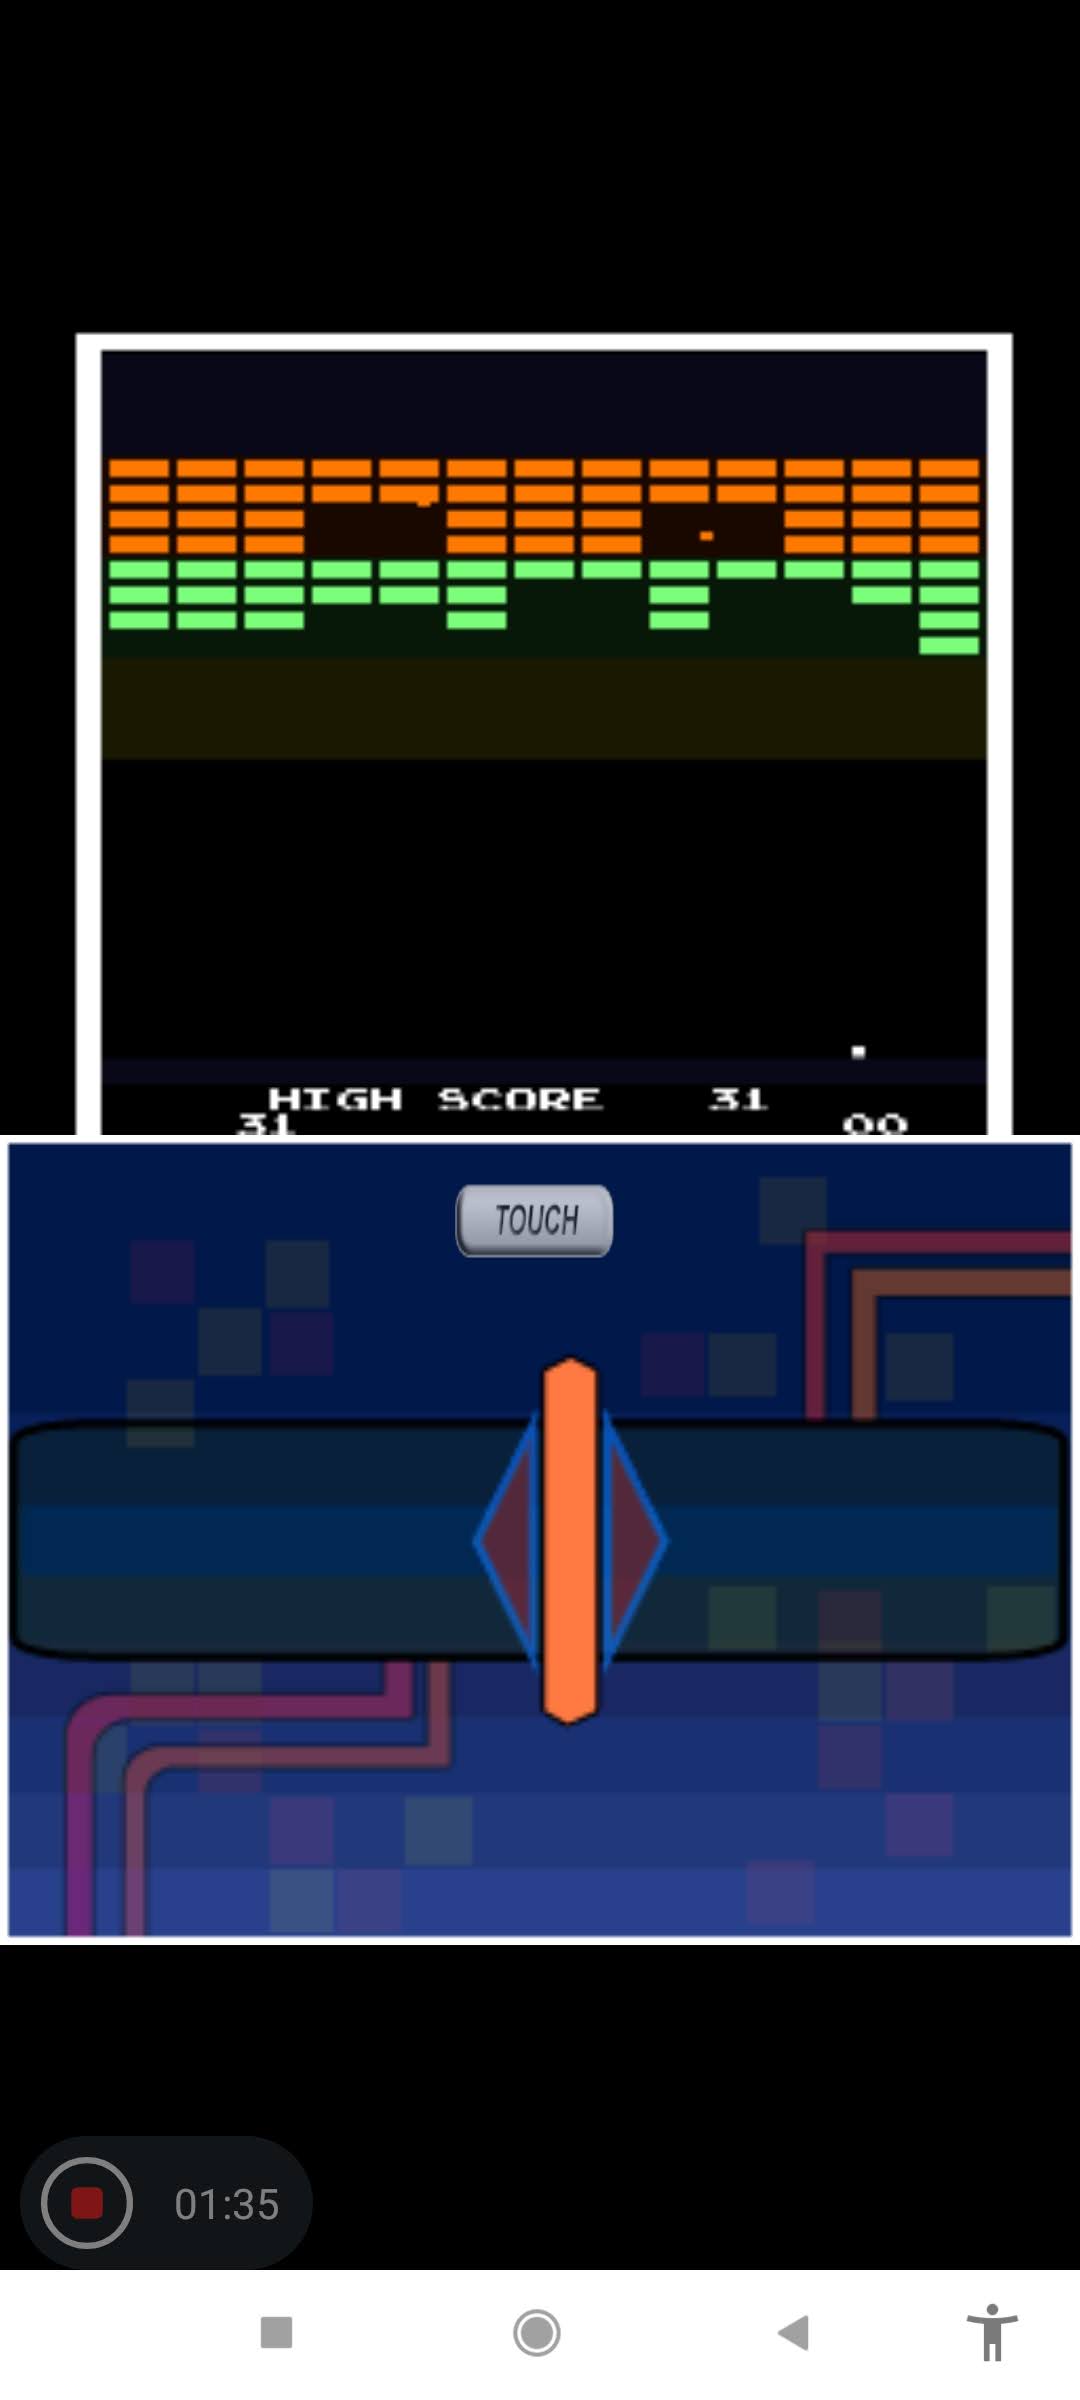 Larquey: Atari Greatest Hits: Volume 2: Super Breakout [Arcade] (Nintendo DS Emulated) 31 points on 2022-08-14 01:05:03